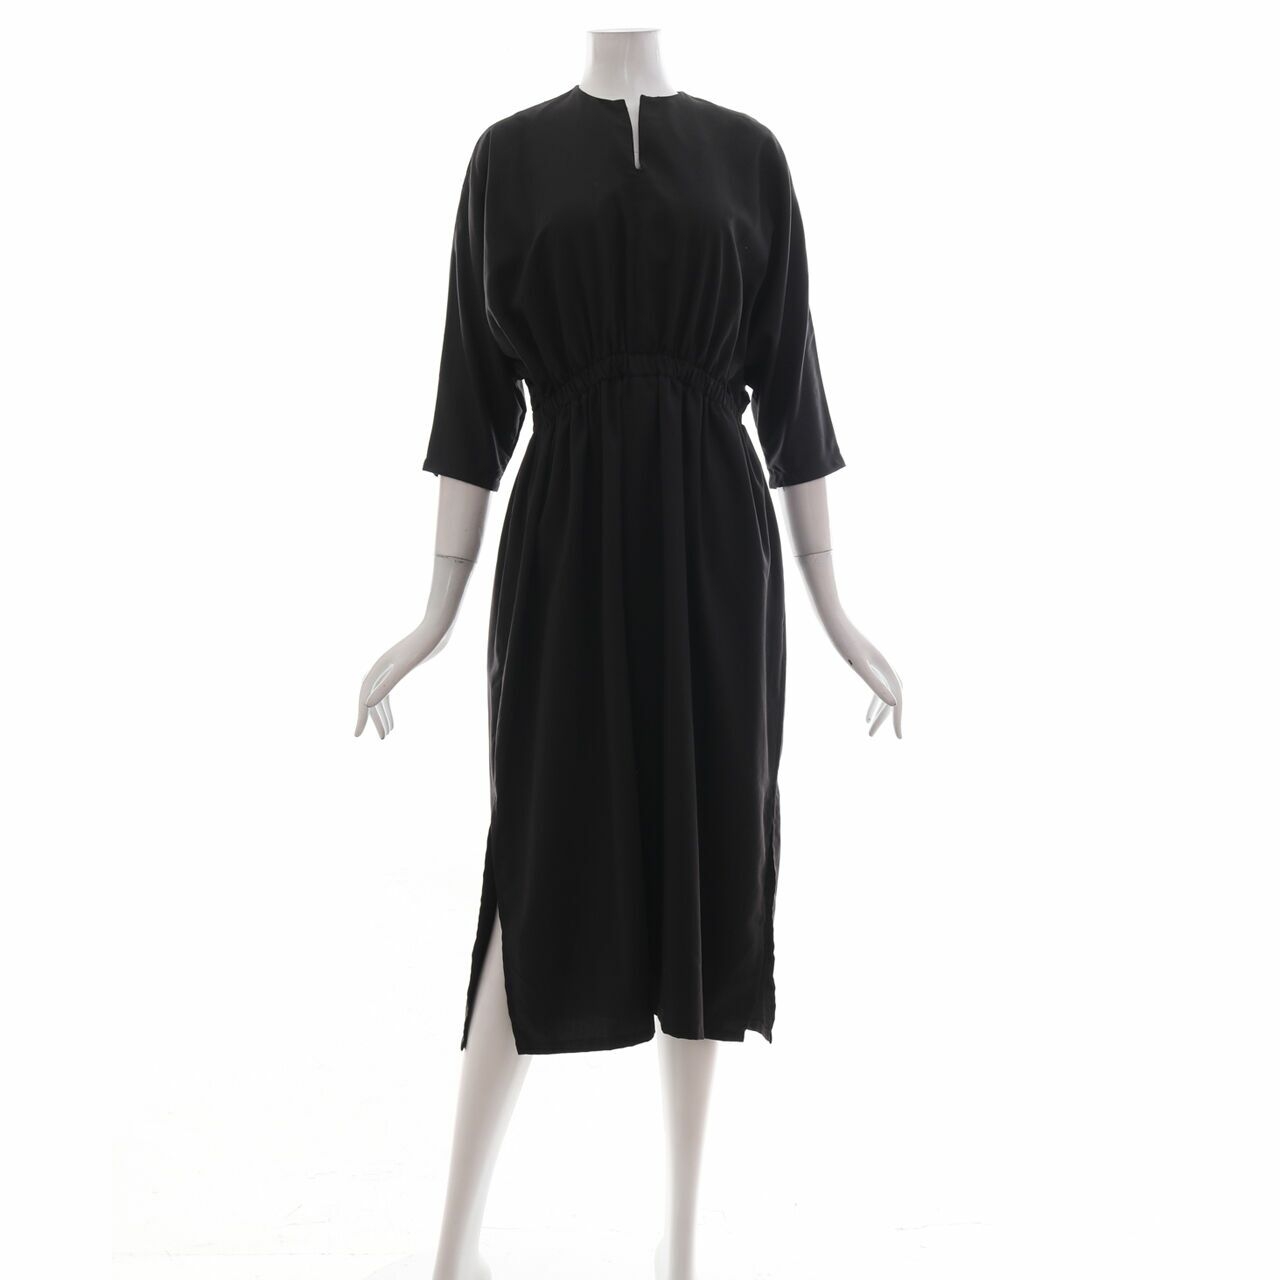 Peggy By Shop At Shopee Black Midi Dress